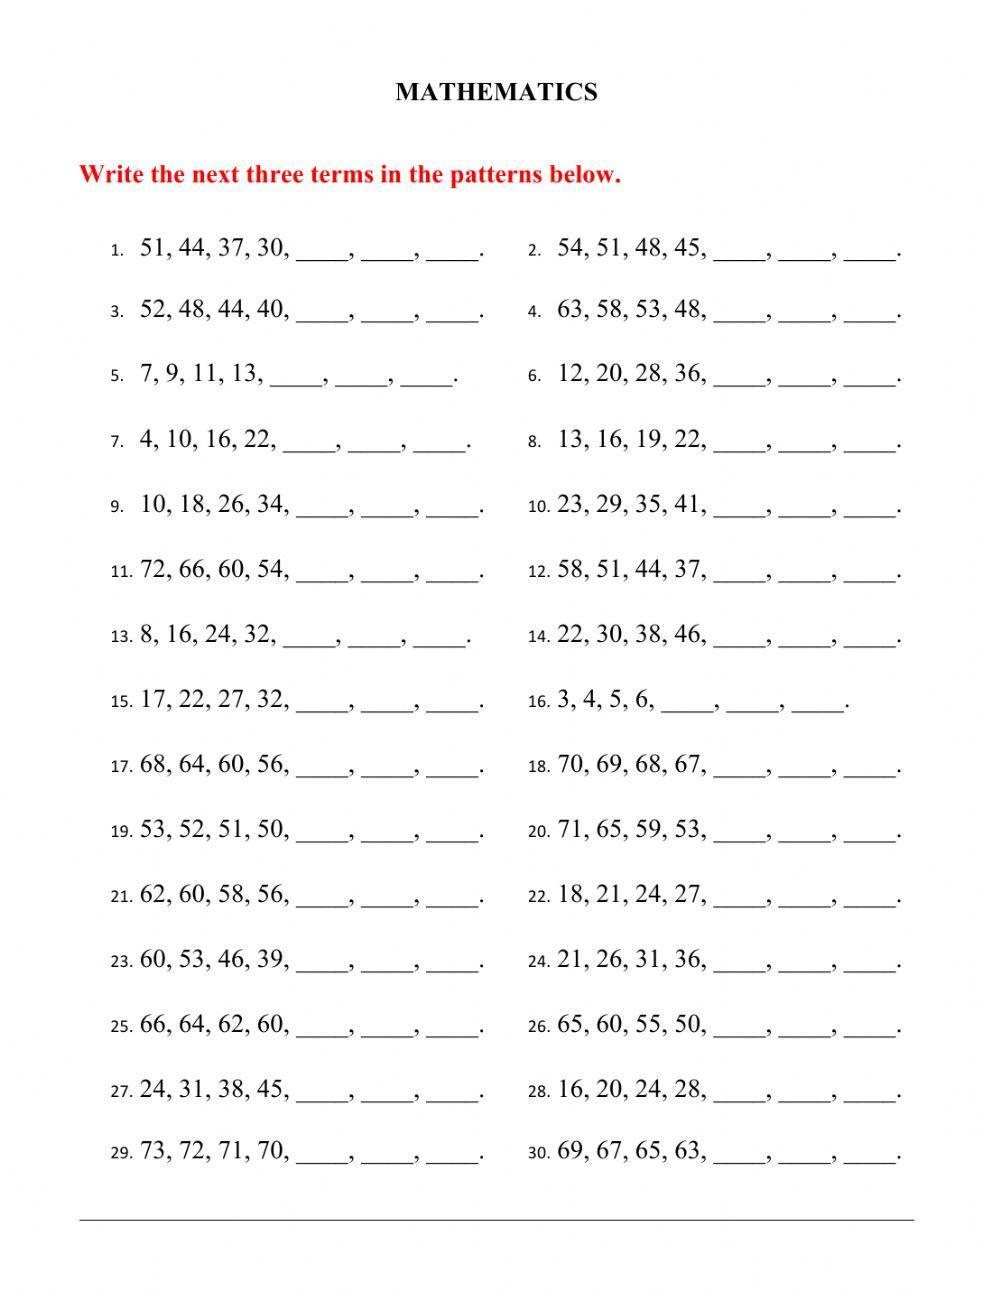 Mathematics Bi Weekly Test 4